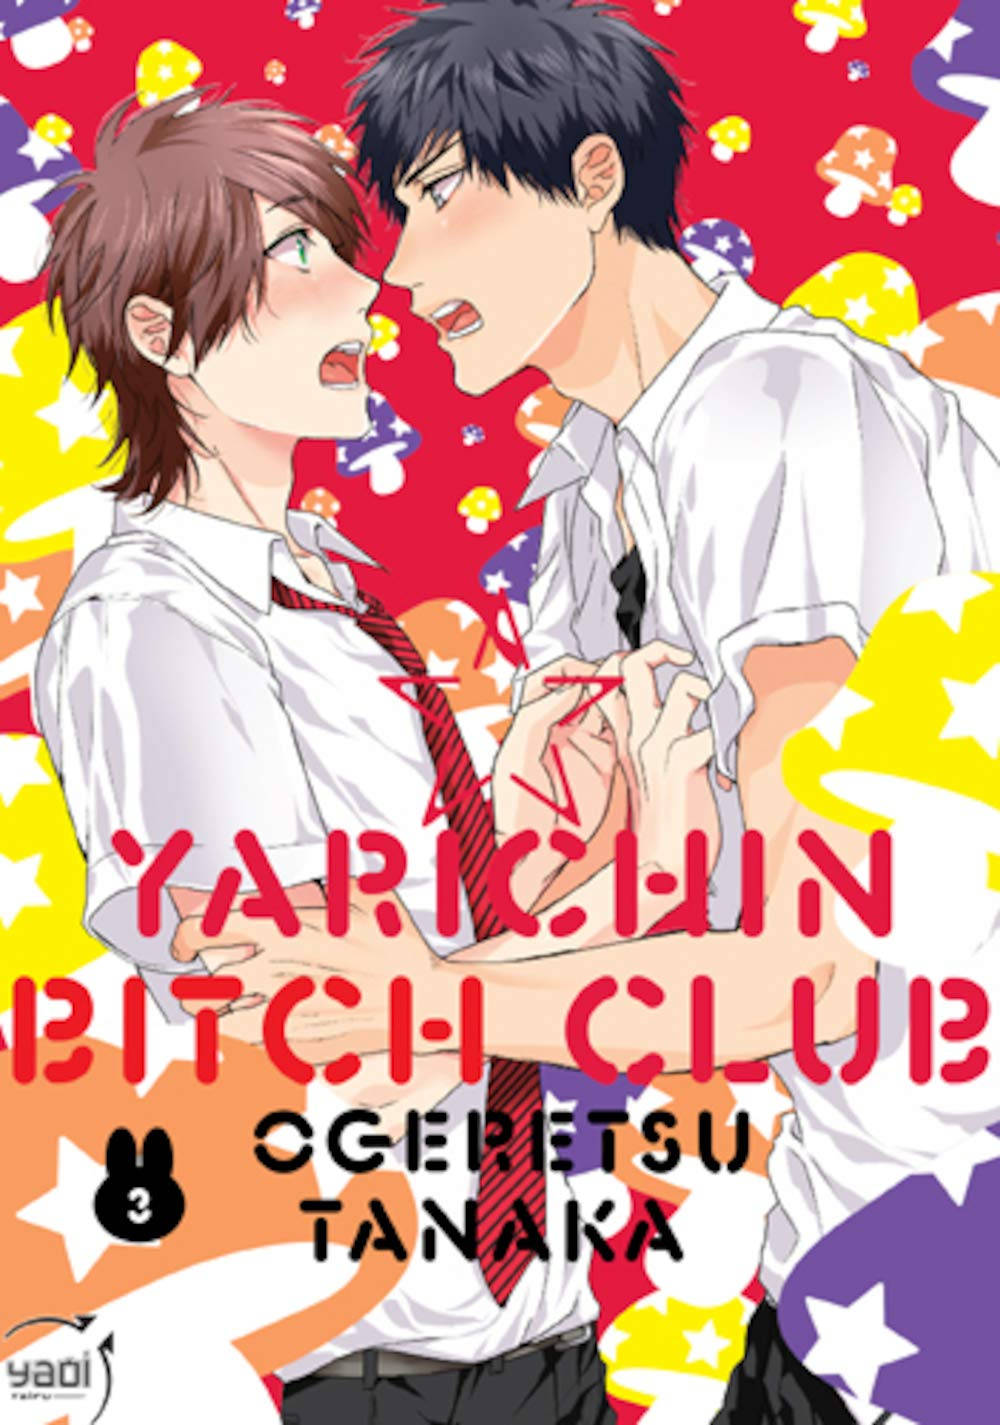 Yarichin Bitch Club Face Off